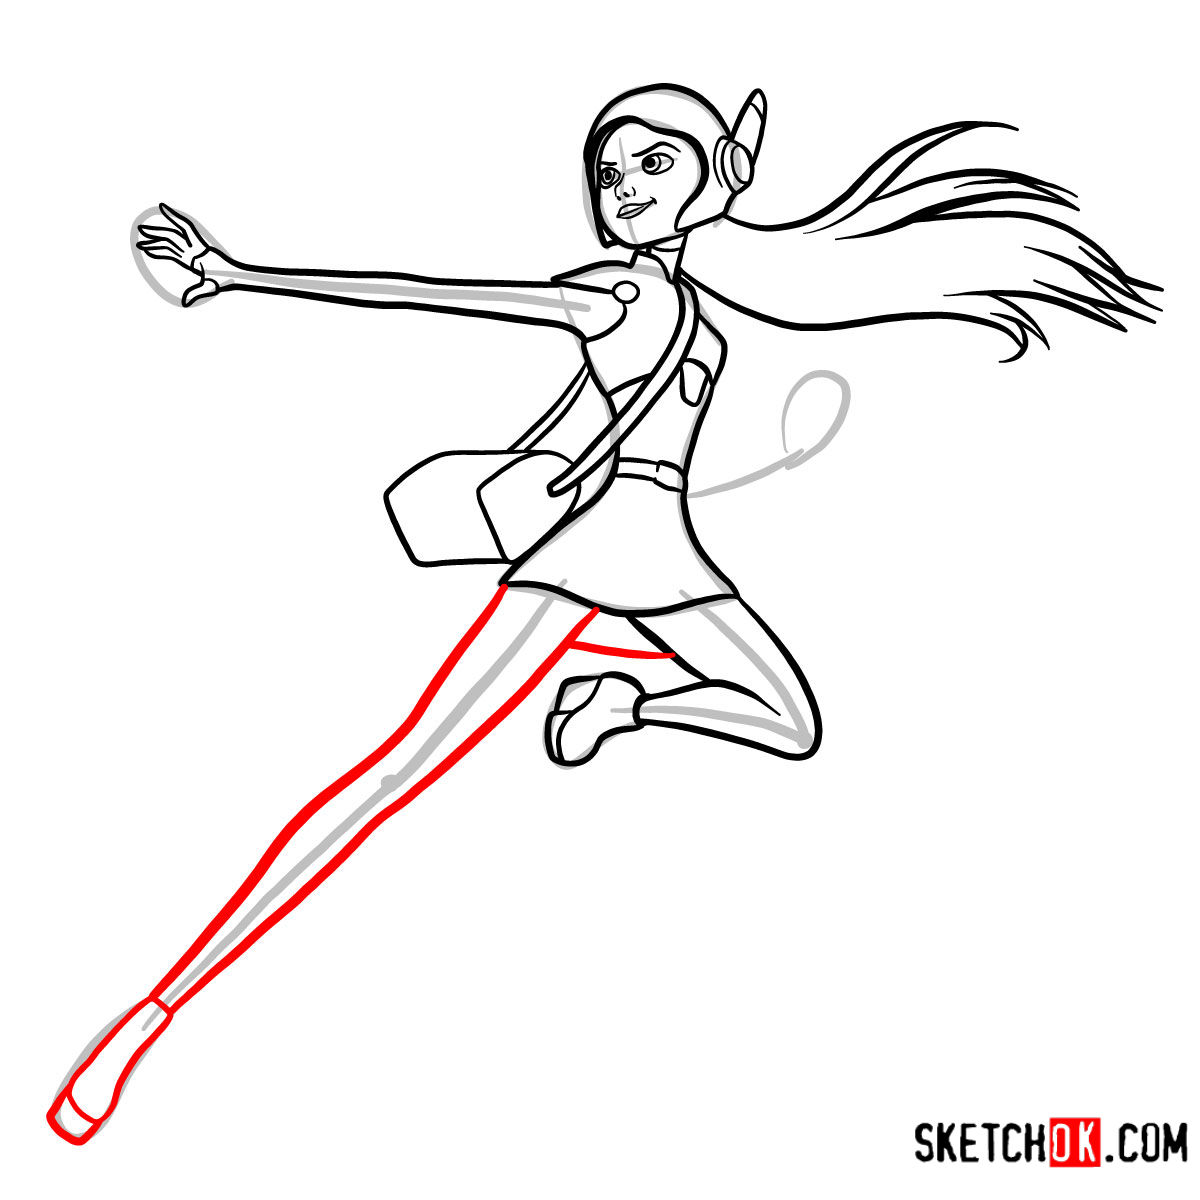 How to draw Honey Lemon in her superhero suit - step 11